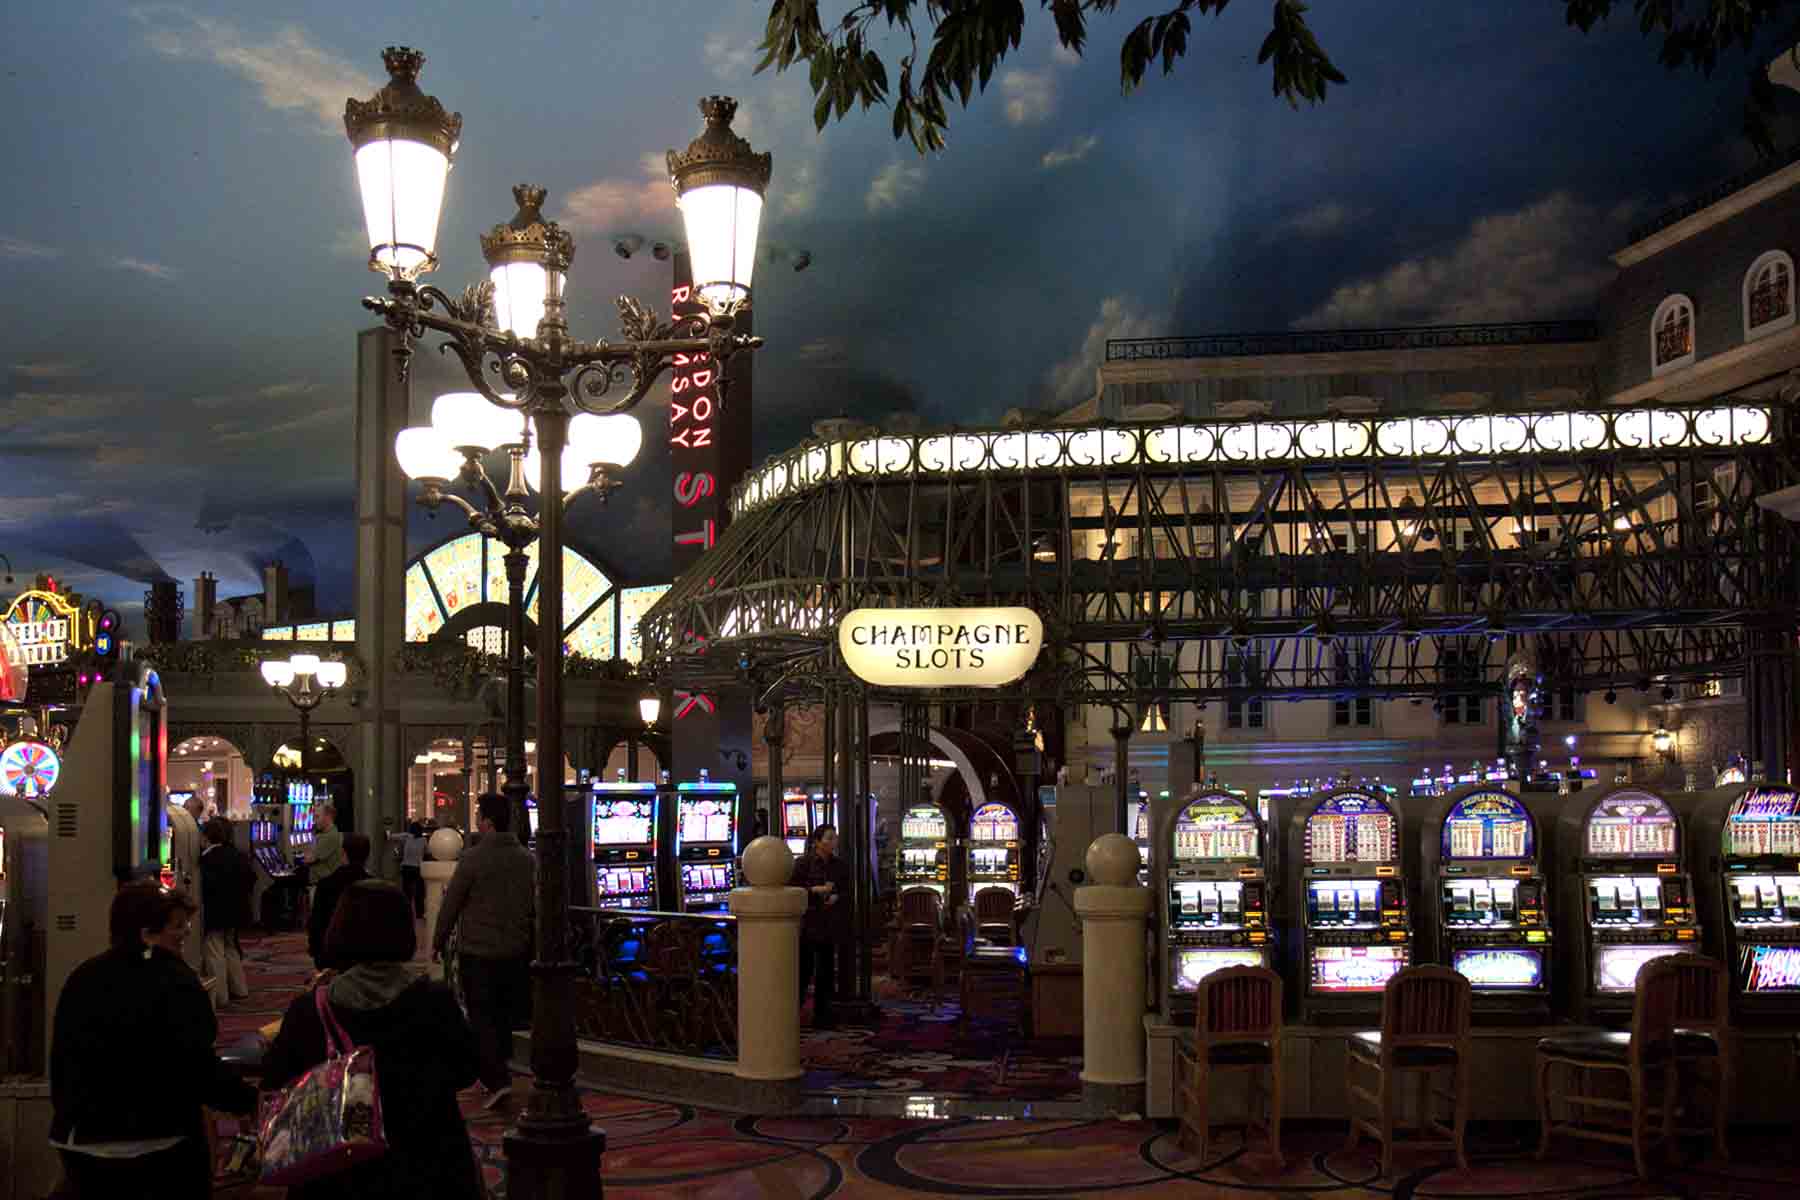 Champagne slots in the Paris Casino, Las Vegas